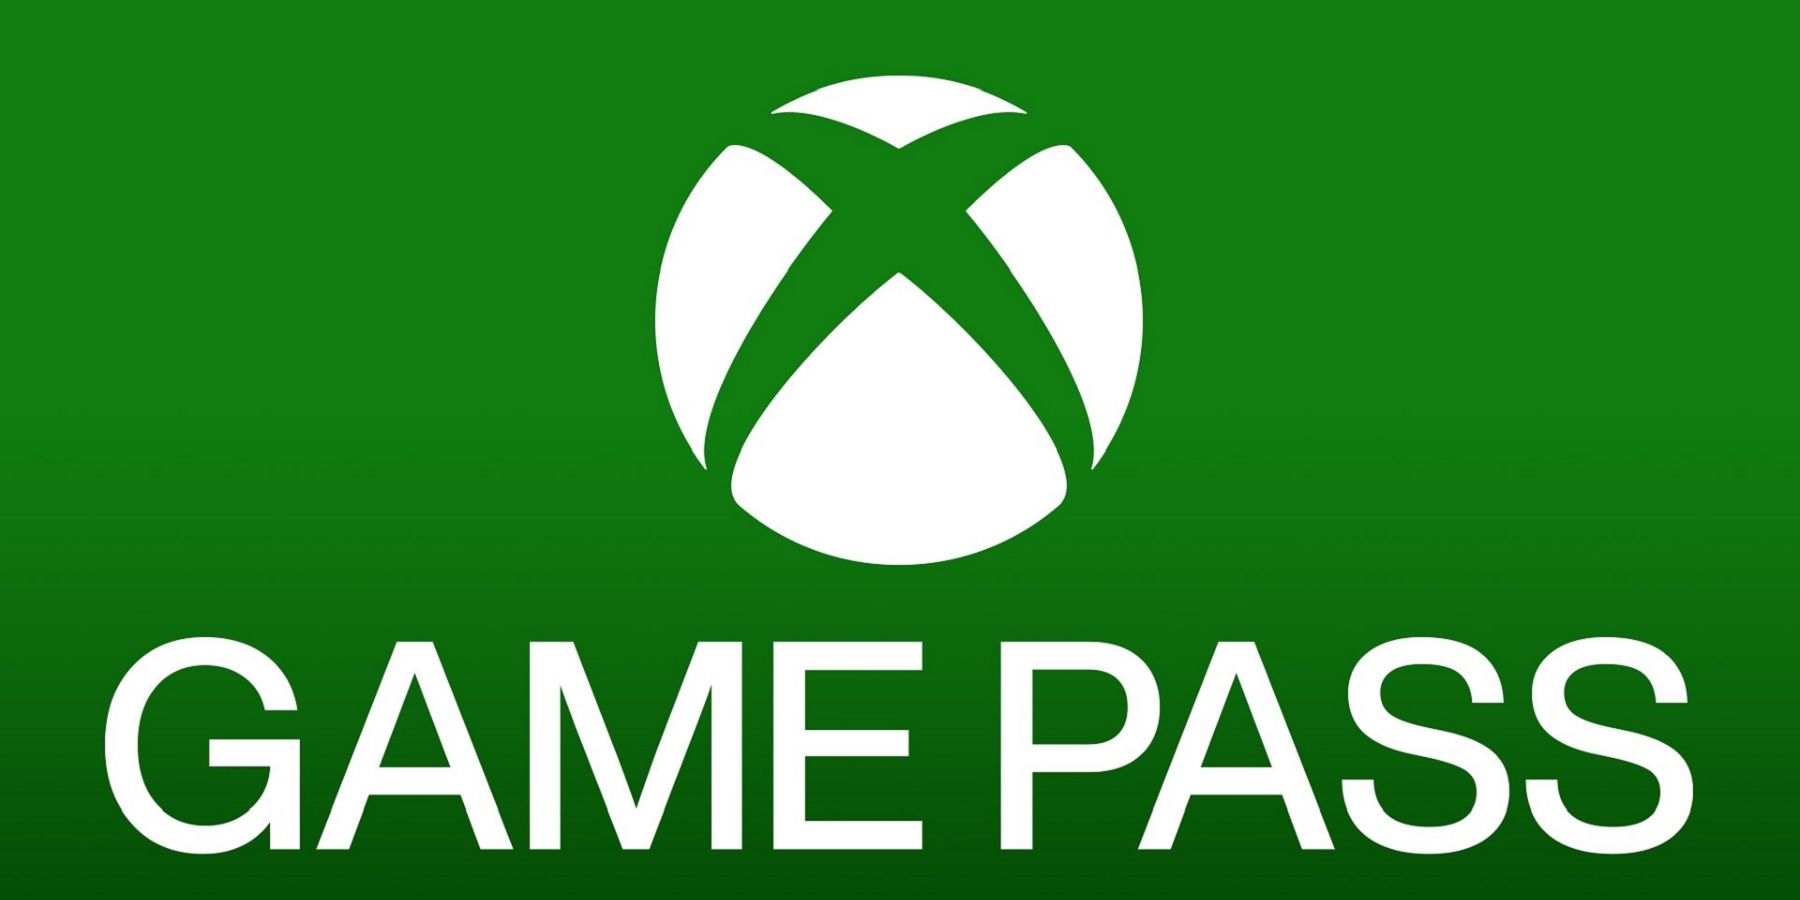 xbox game pass logo green background